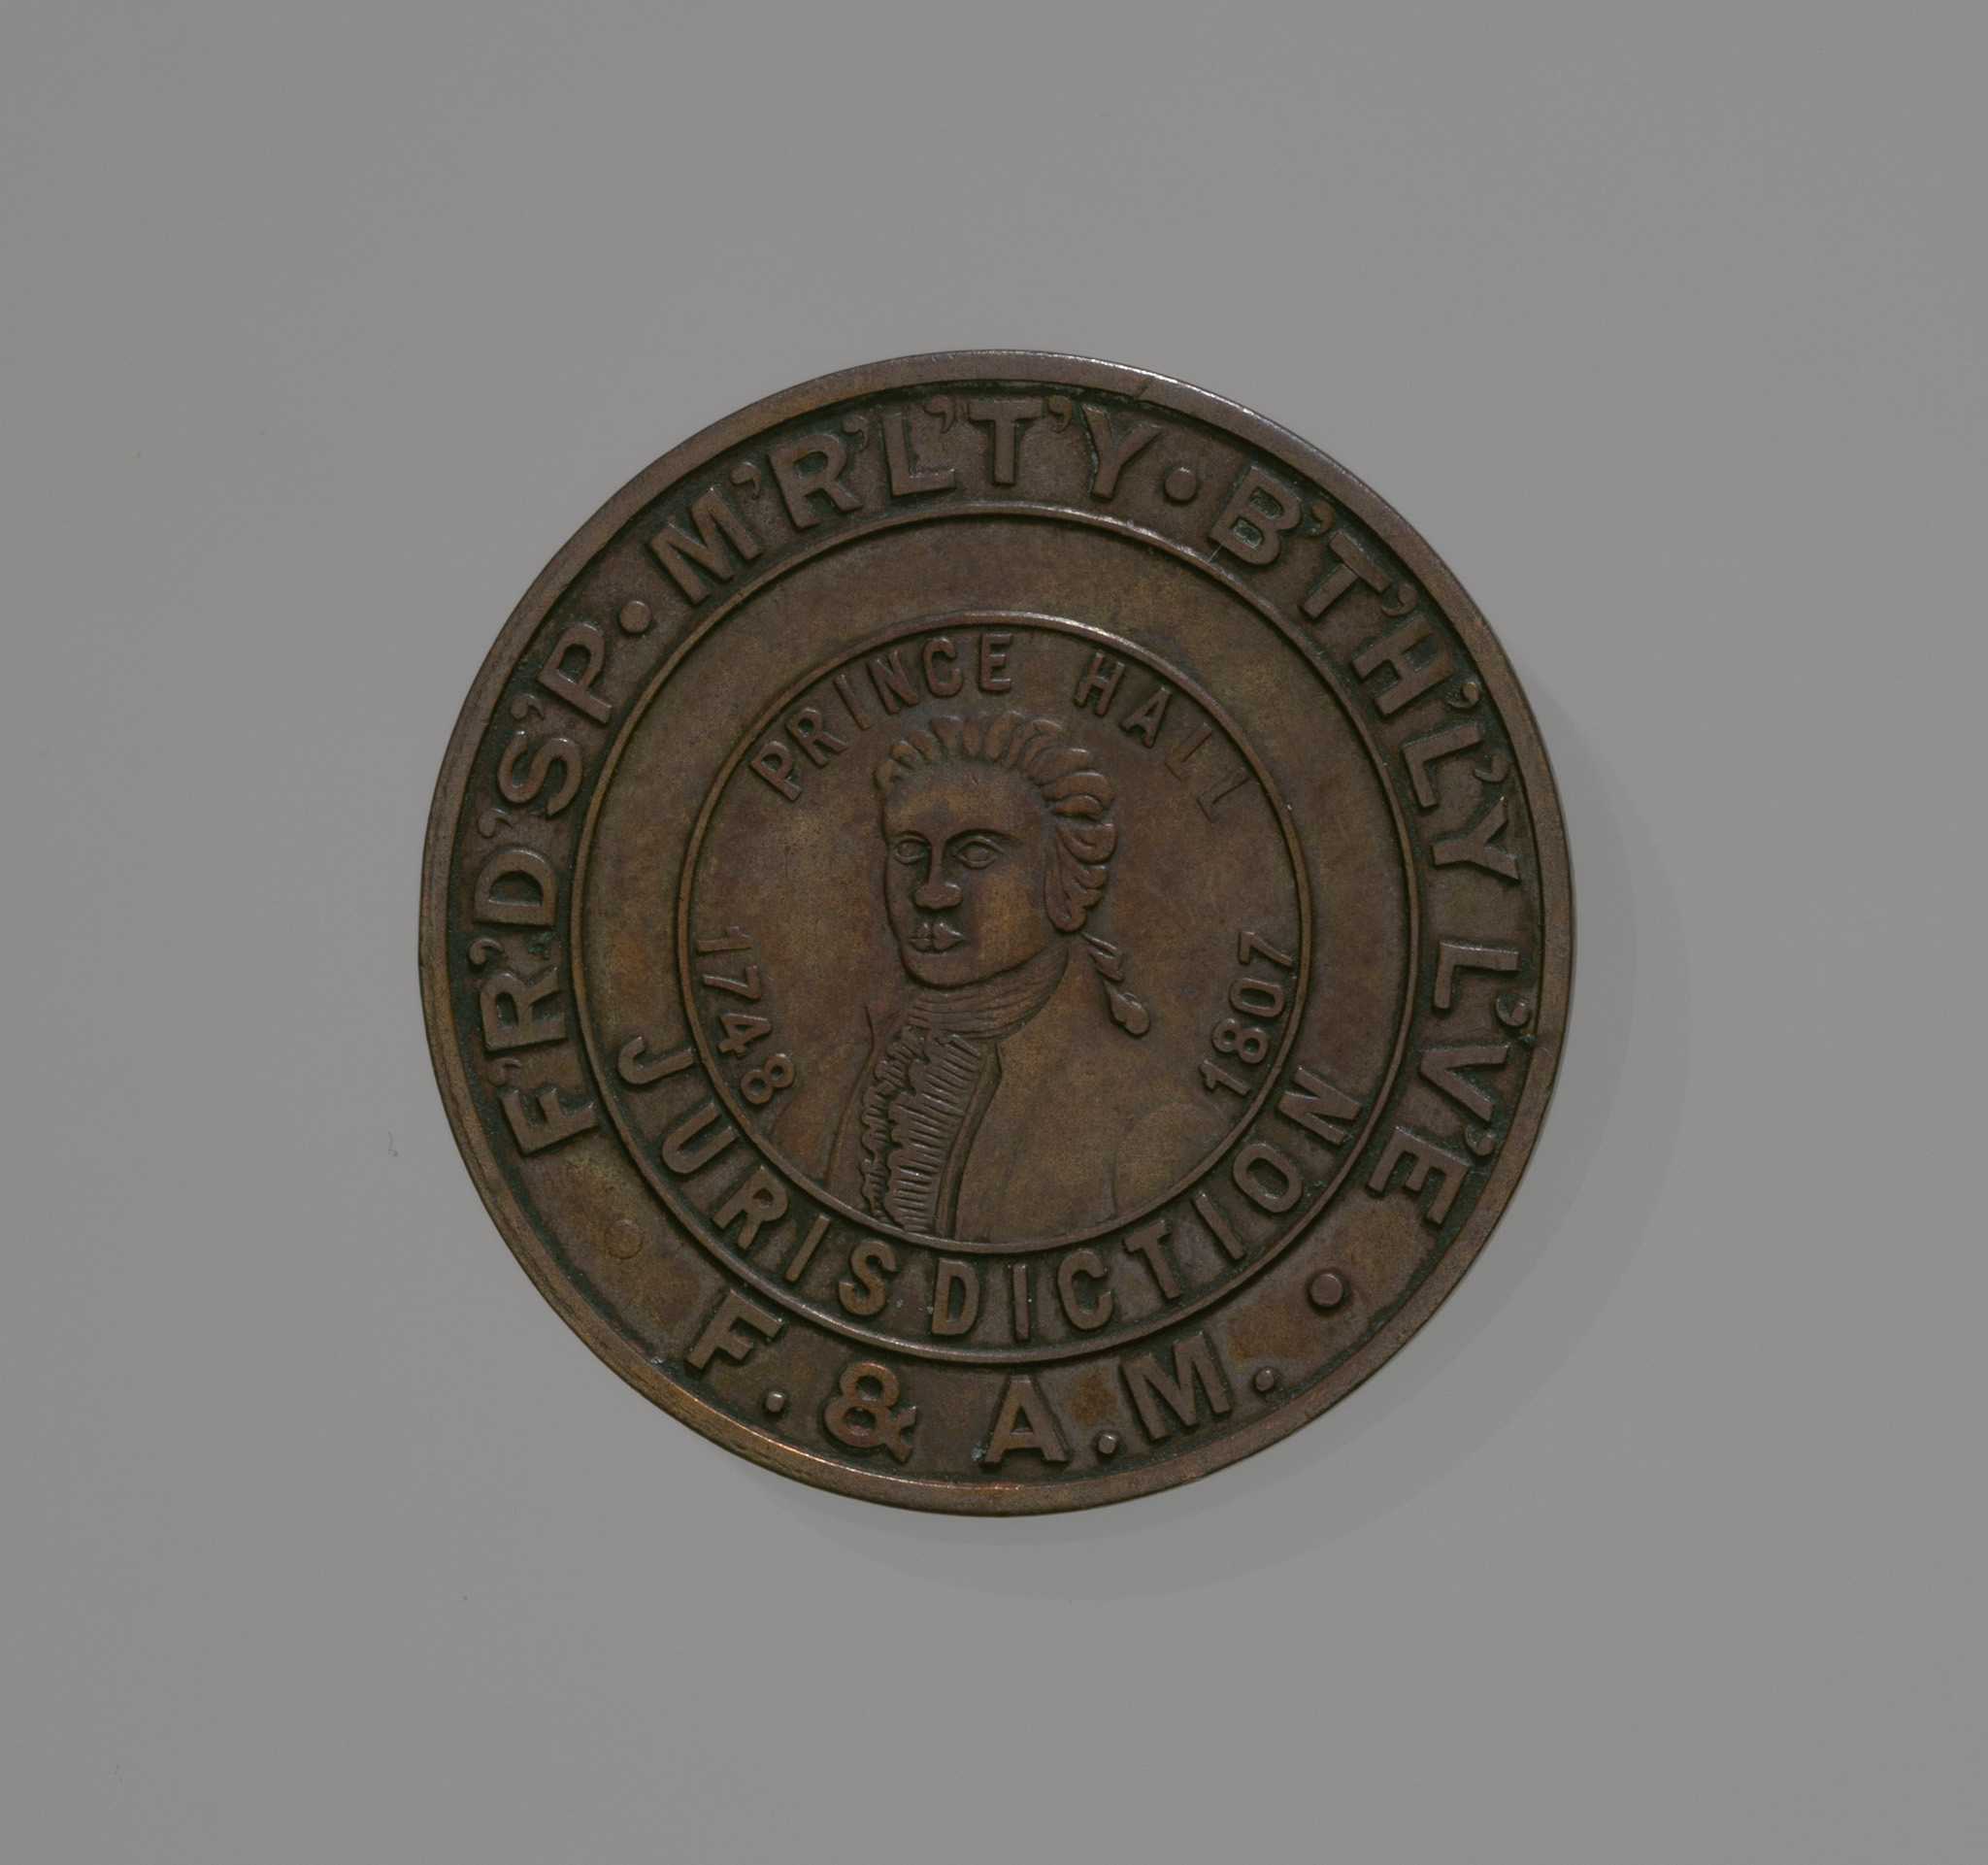 Photograph of Medal depicting Prince Hall and Freemasonry